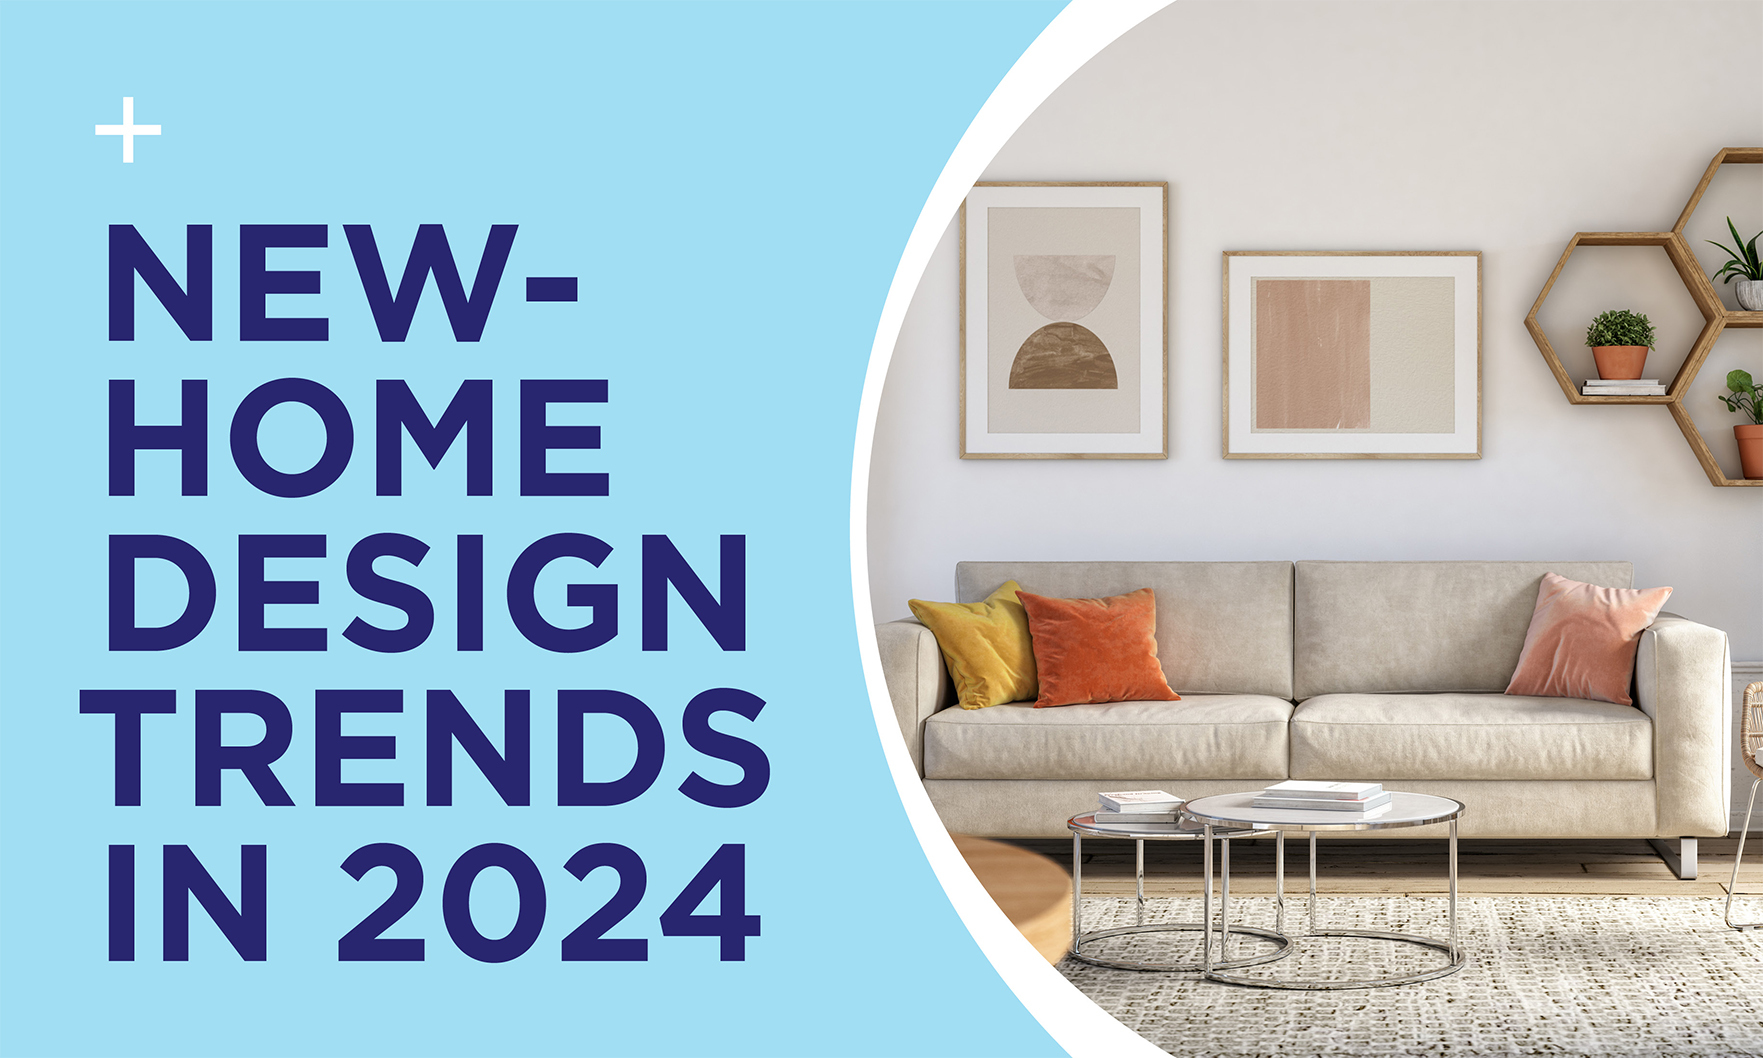 2024 Home Design Trends, According to Houzz